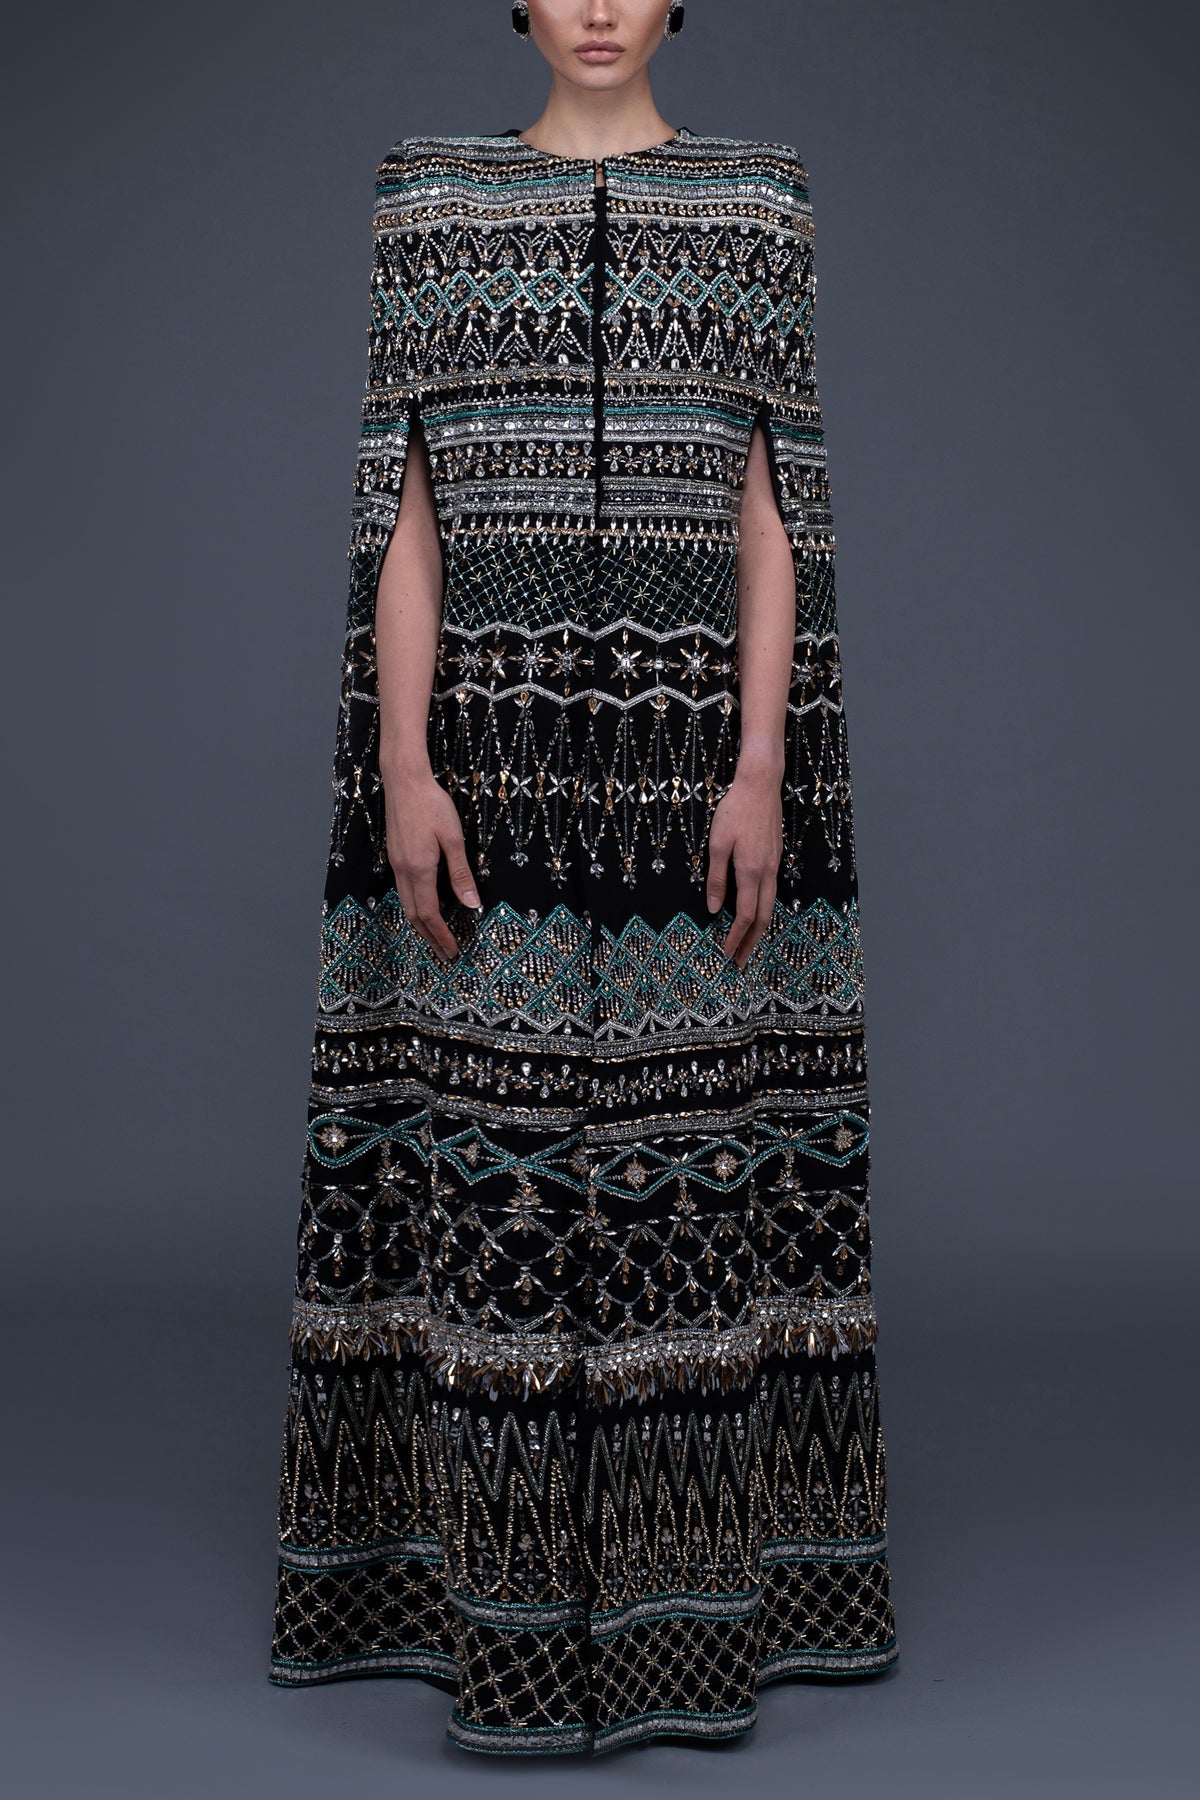 Zara Cape & Sleeveless Dress